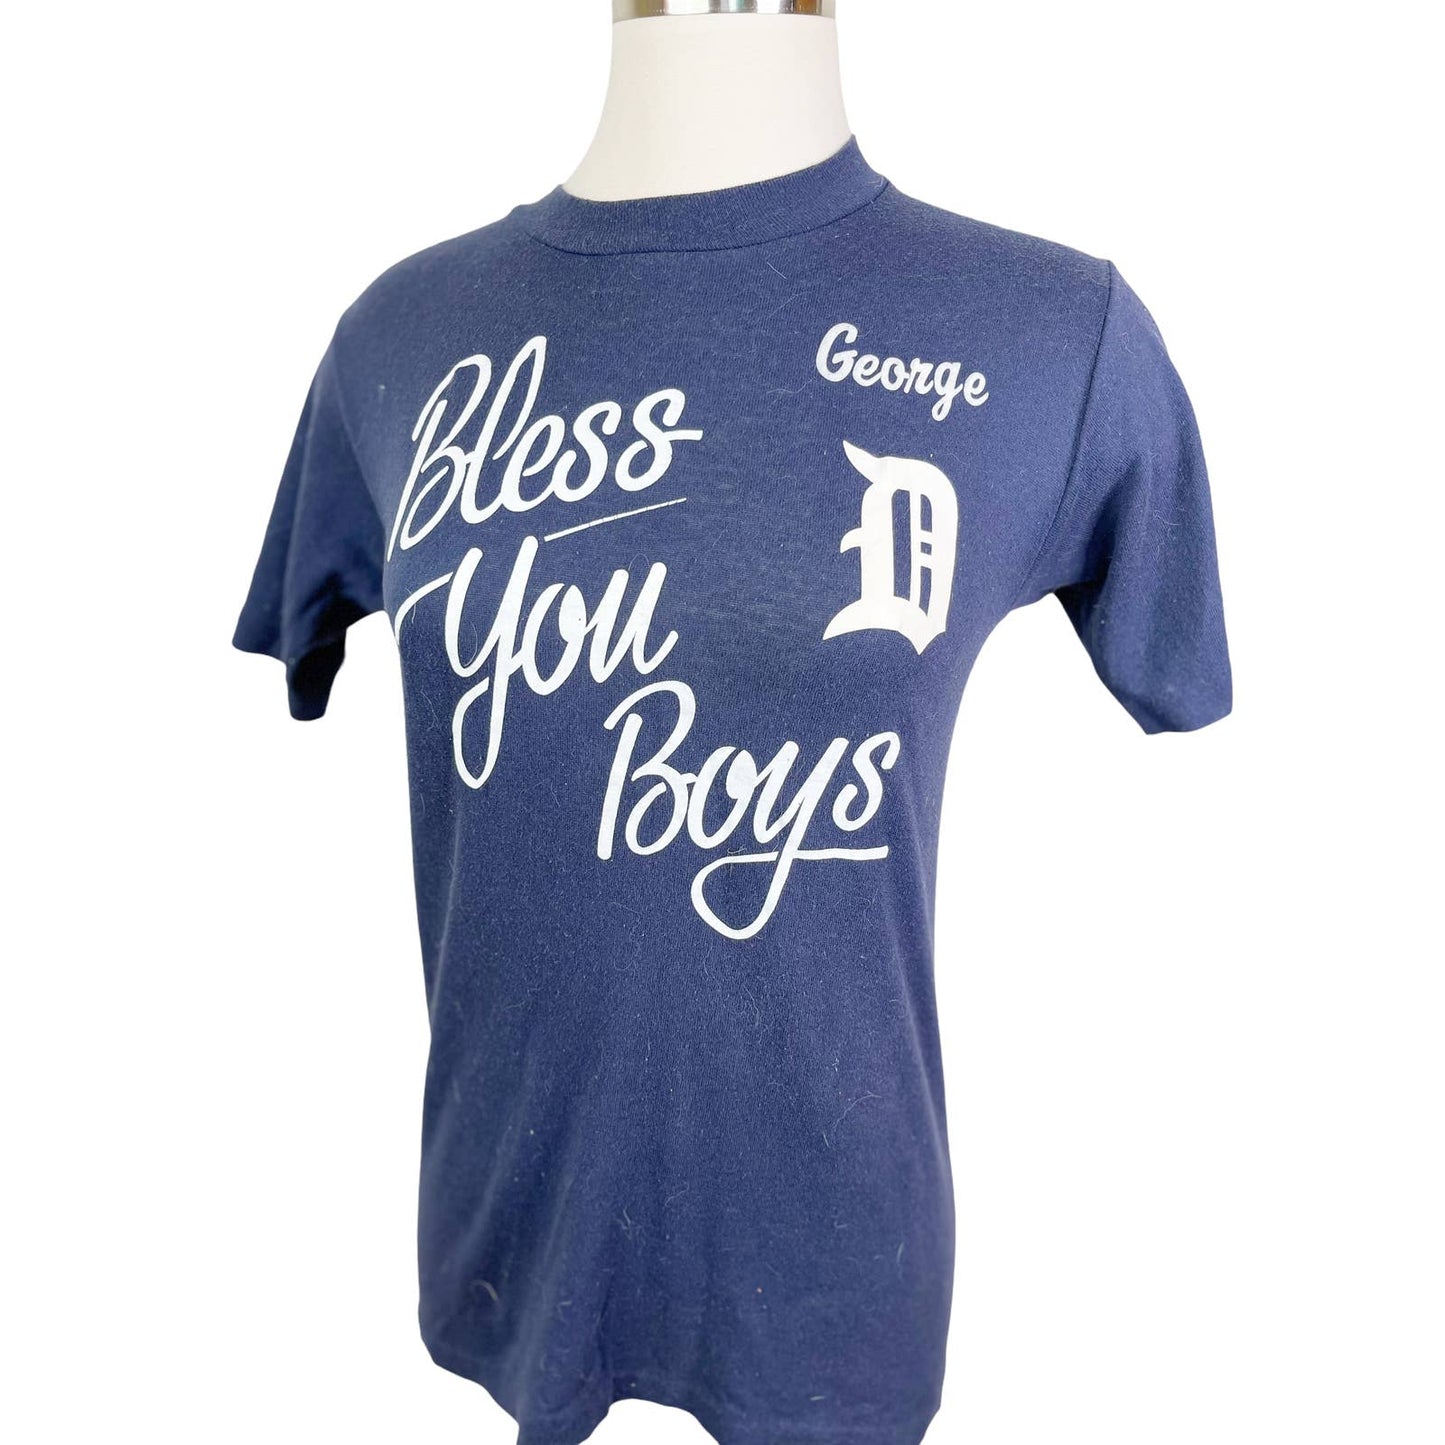 sportswearVintage Detroit Tigers Baseball "Bless You Boys" Single Stitch T-Shirt Iconic! - Black Dog Vintage